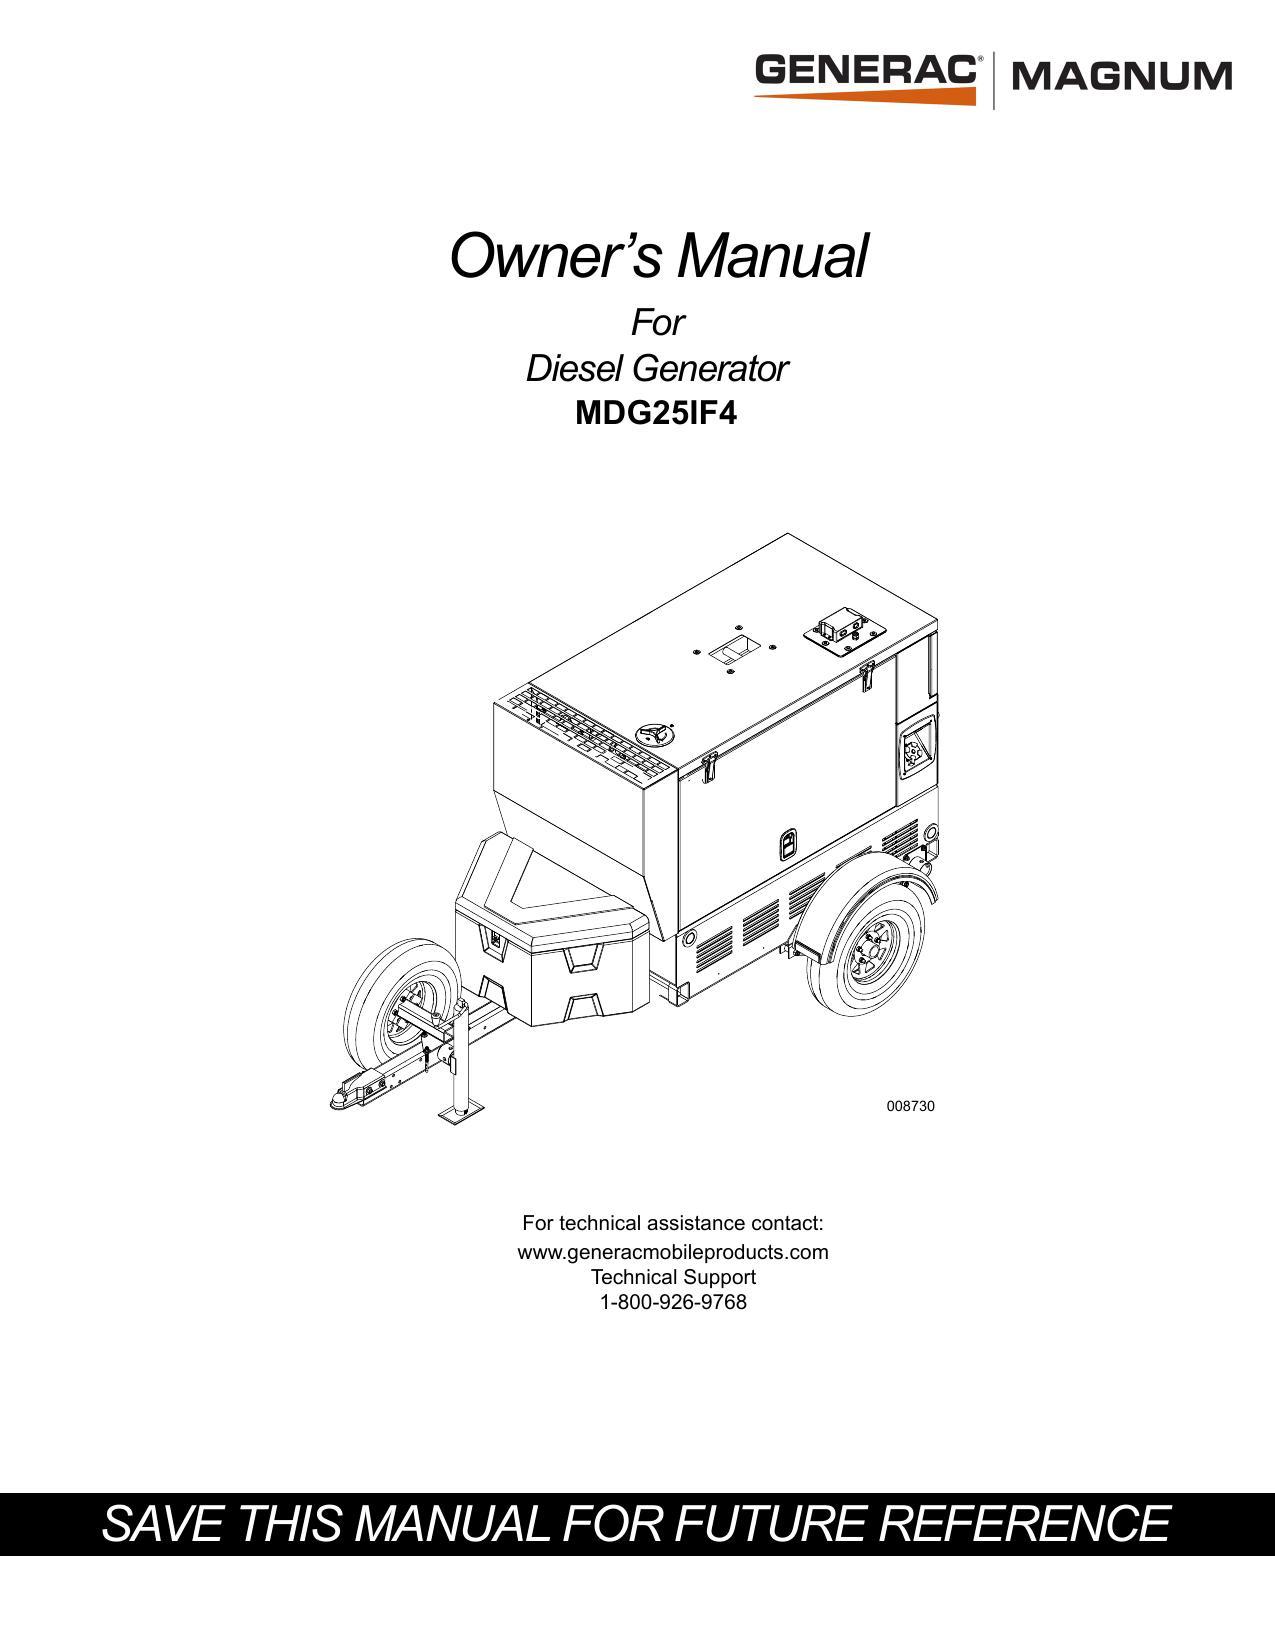 owners-manual-for-diesel-generator-mdg2sif4.pdf